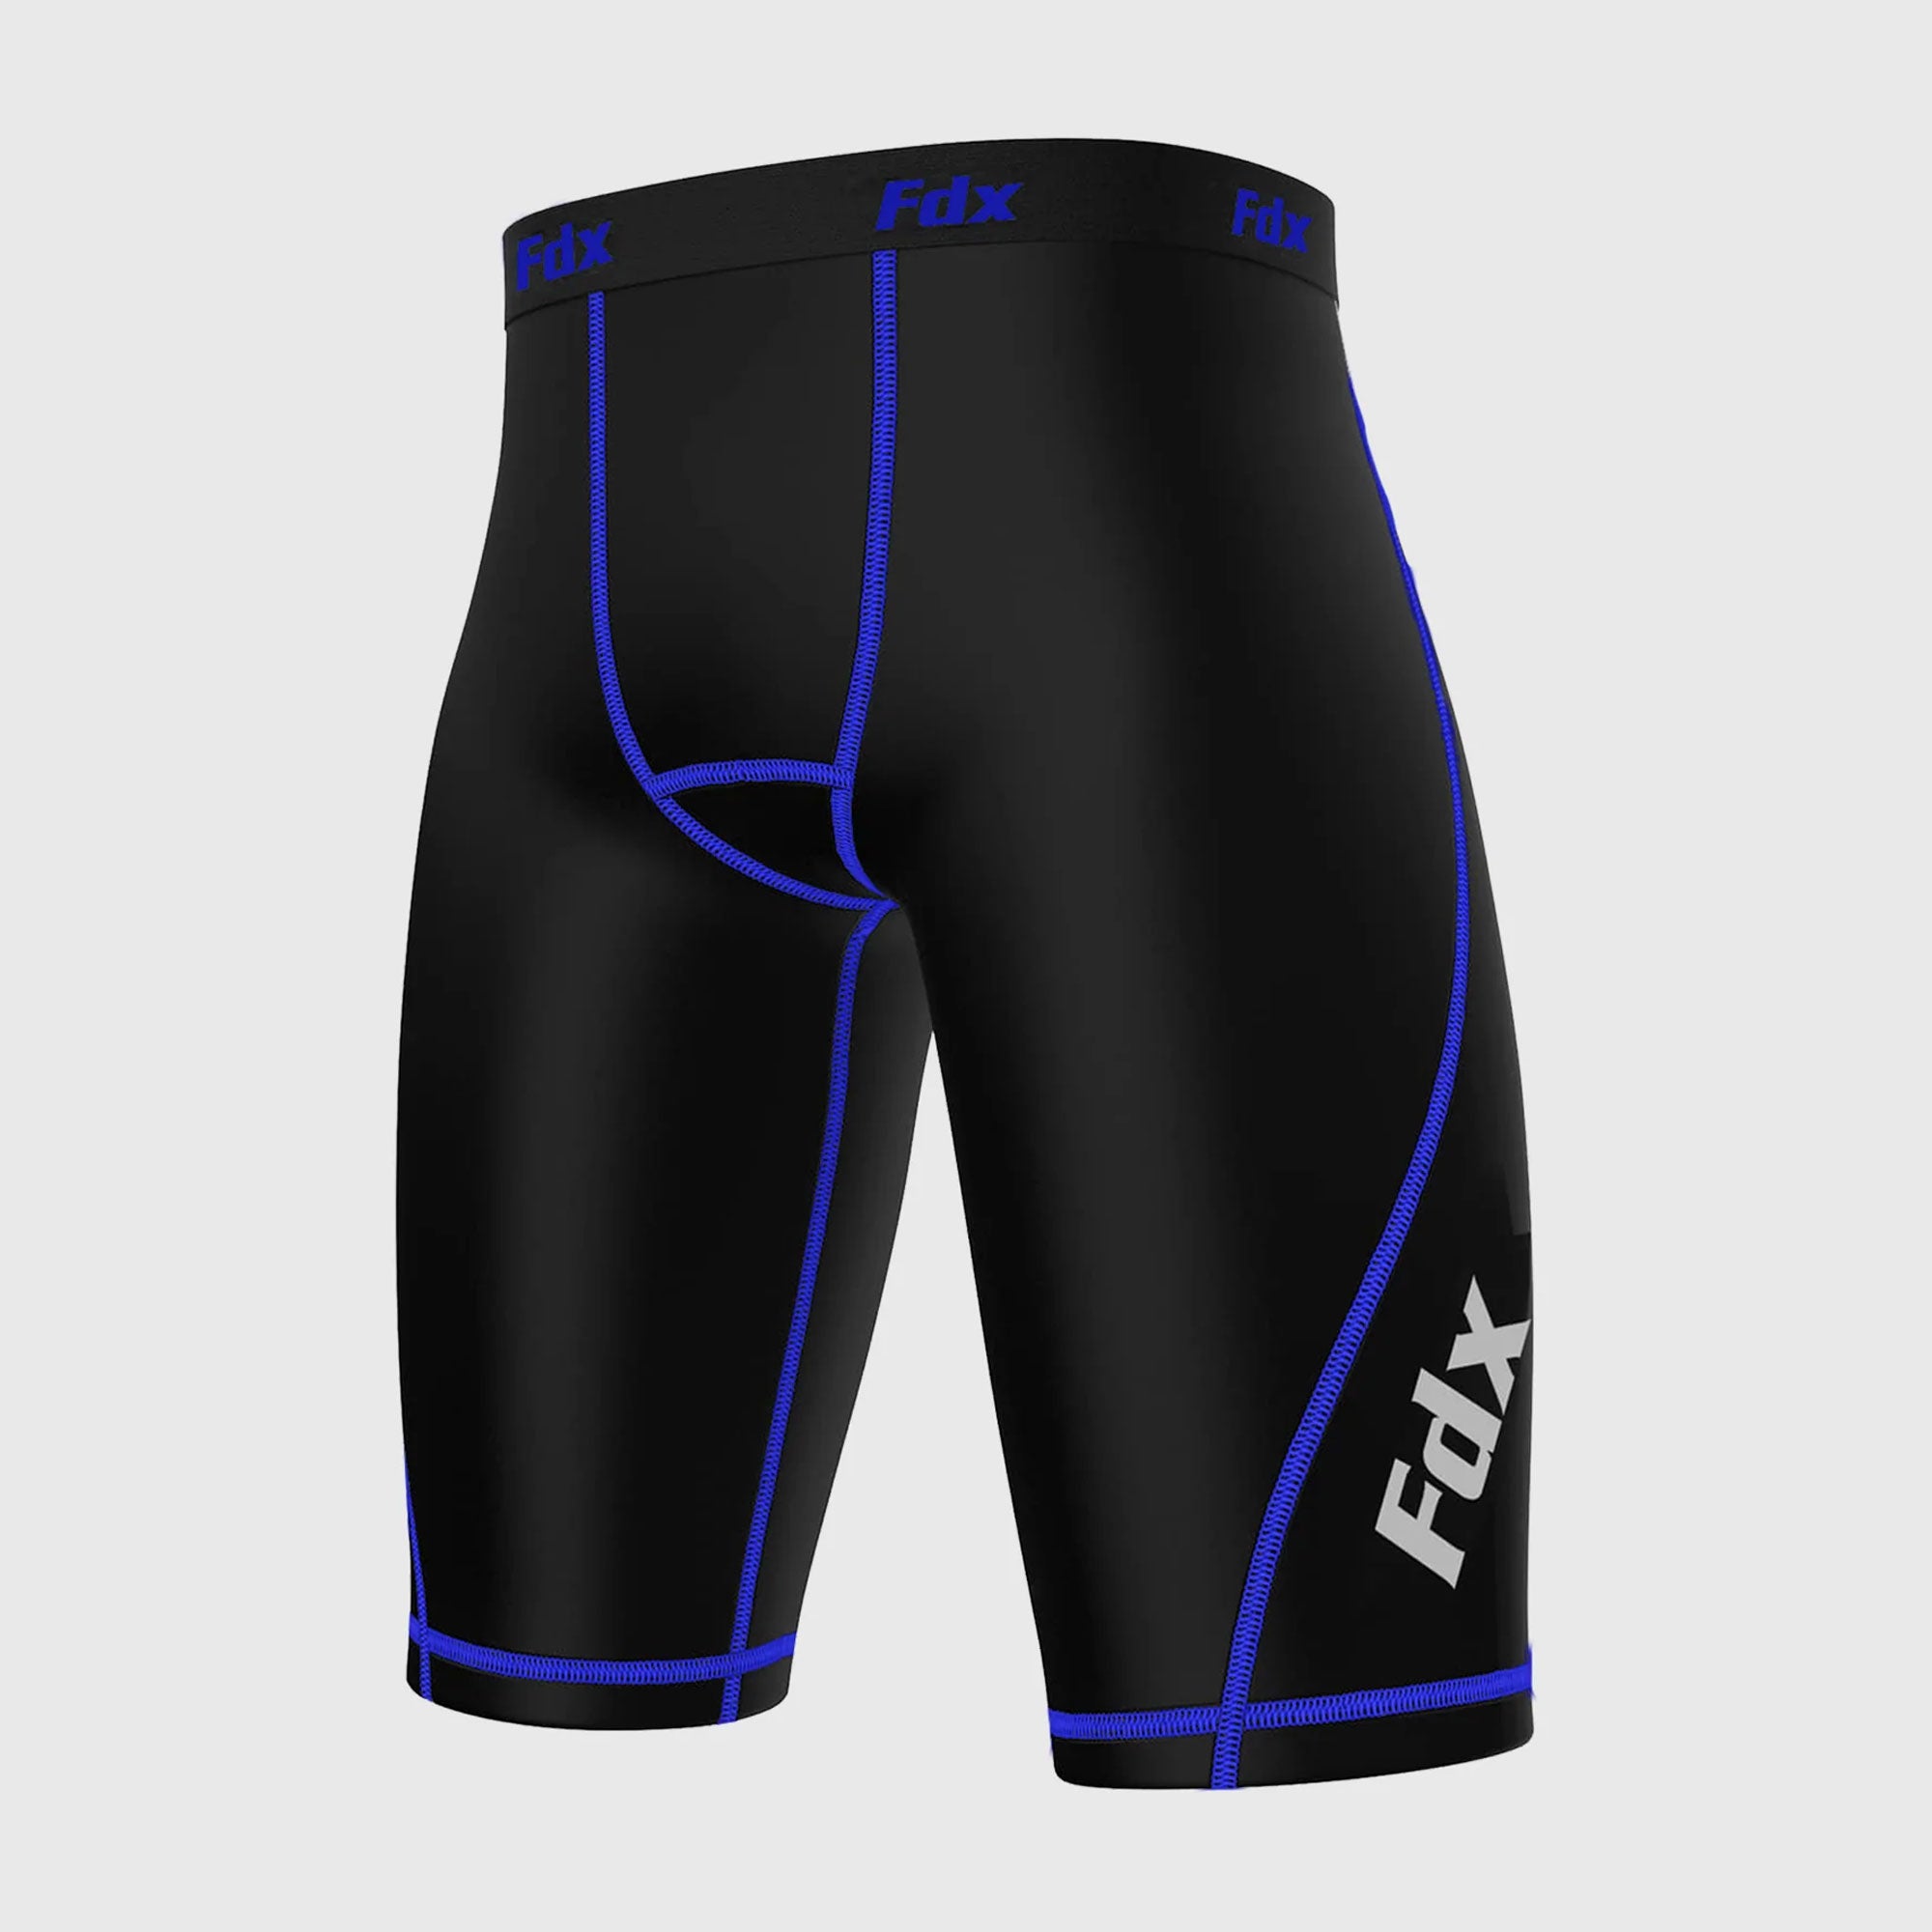 Fdx Men's Black & Blue Compression Shorts Gym Workout Running Athletic Yoga Elastic Waistband Stretchable Breathable